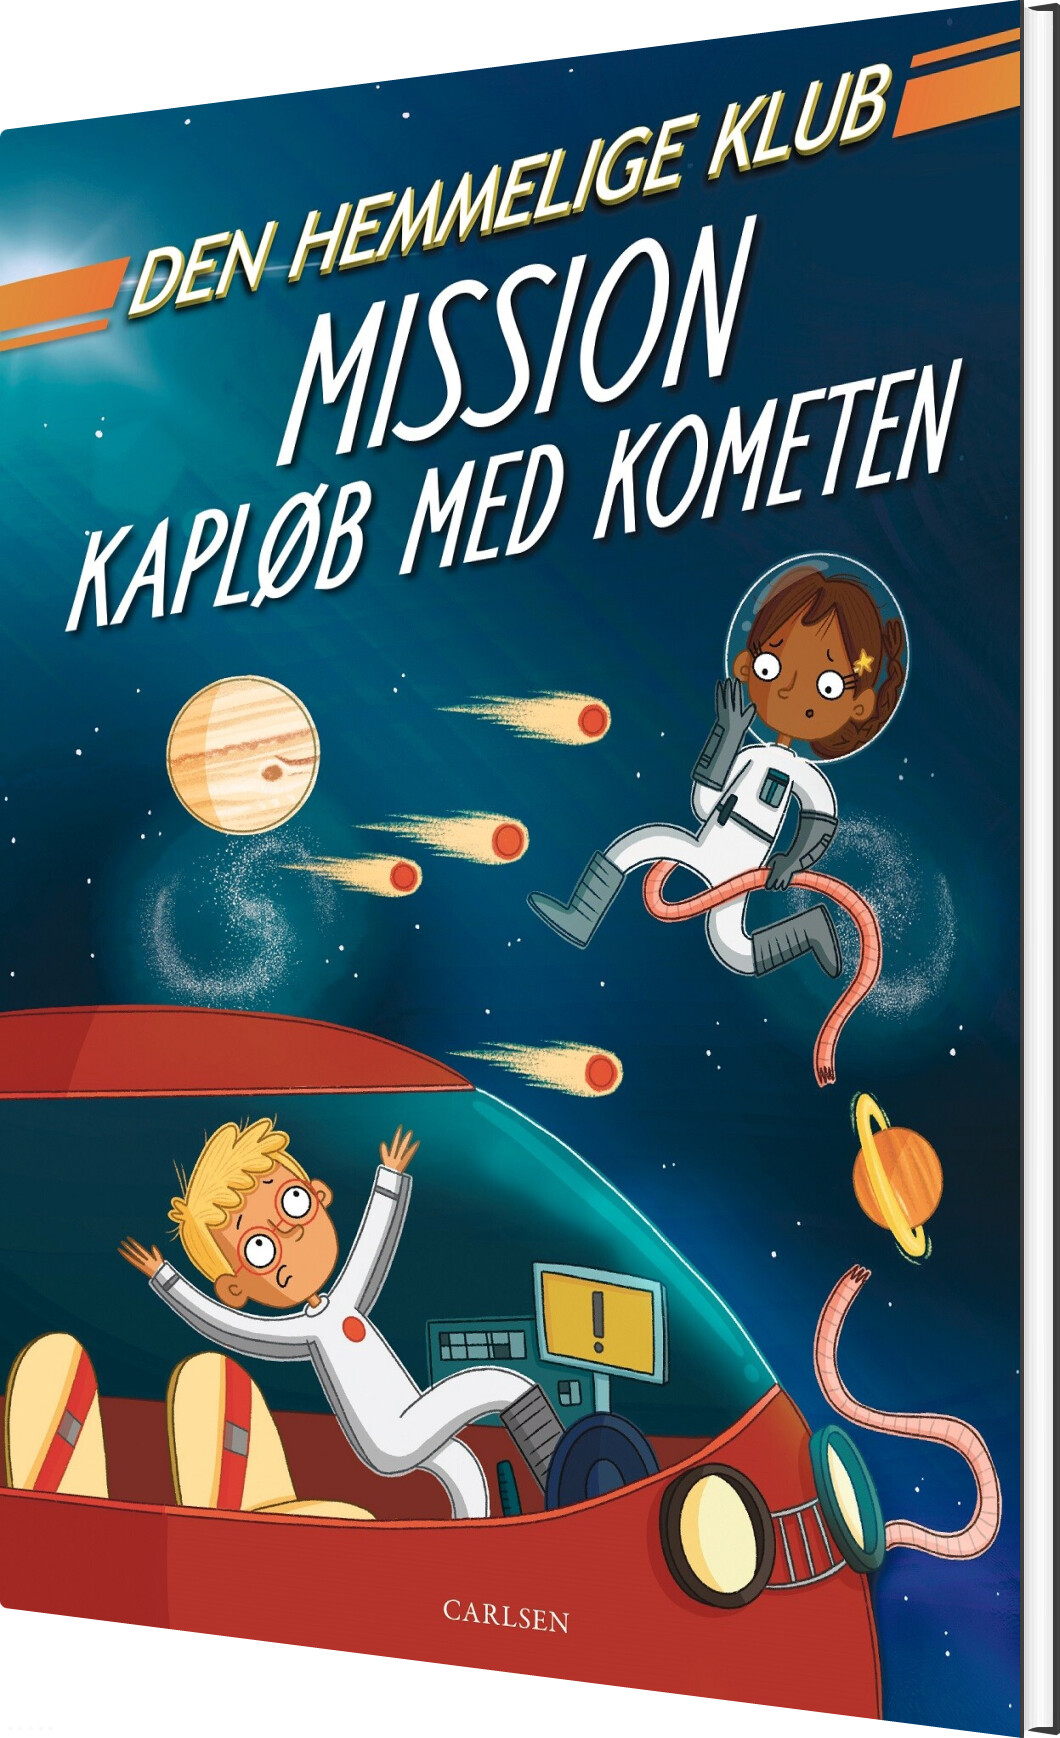 Den Hemmelige Klub: Mission Kapløb Med Kometen - S J King - Bog